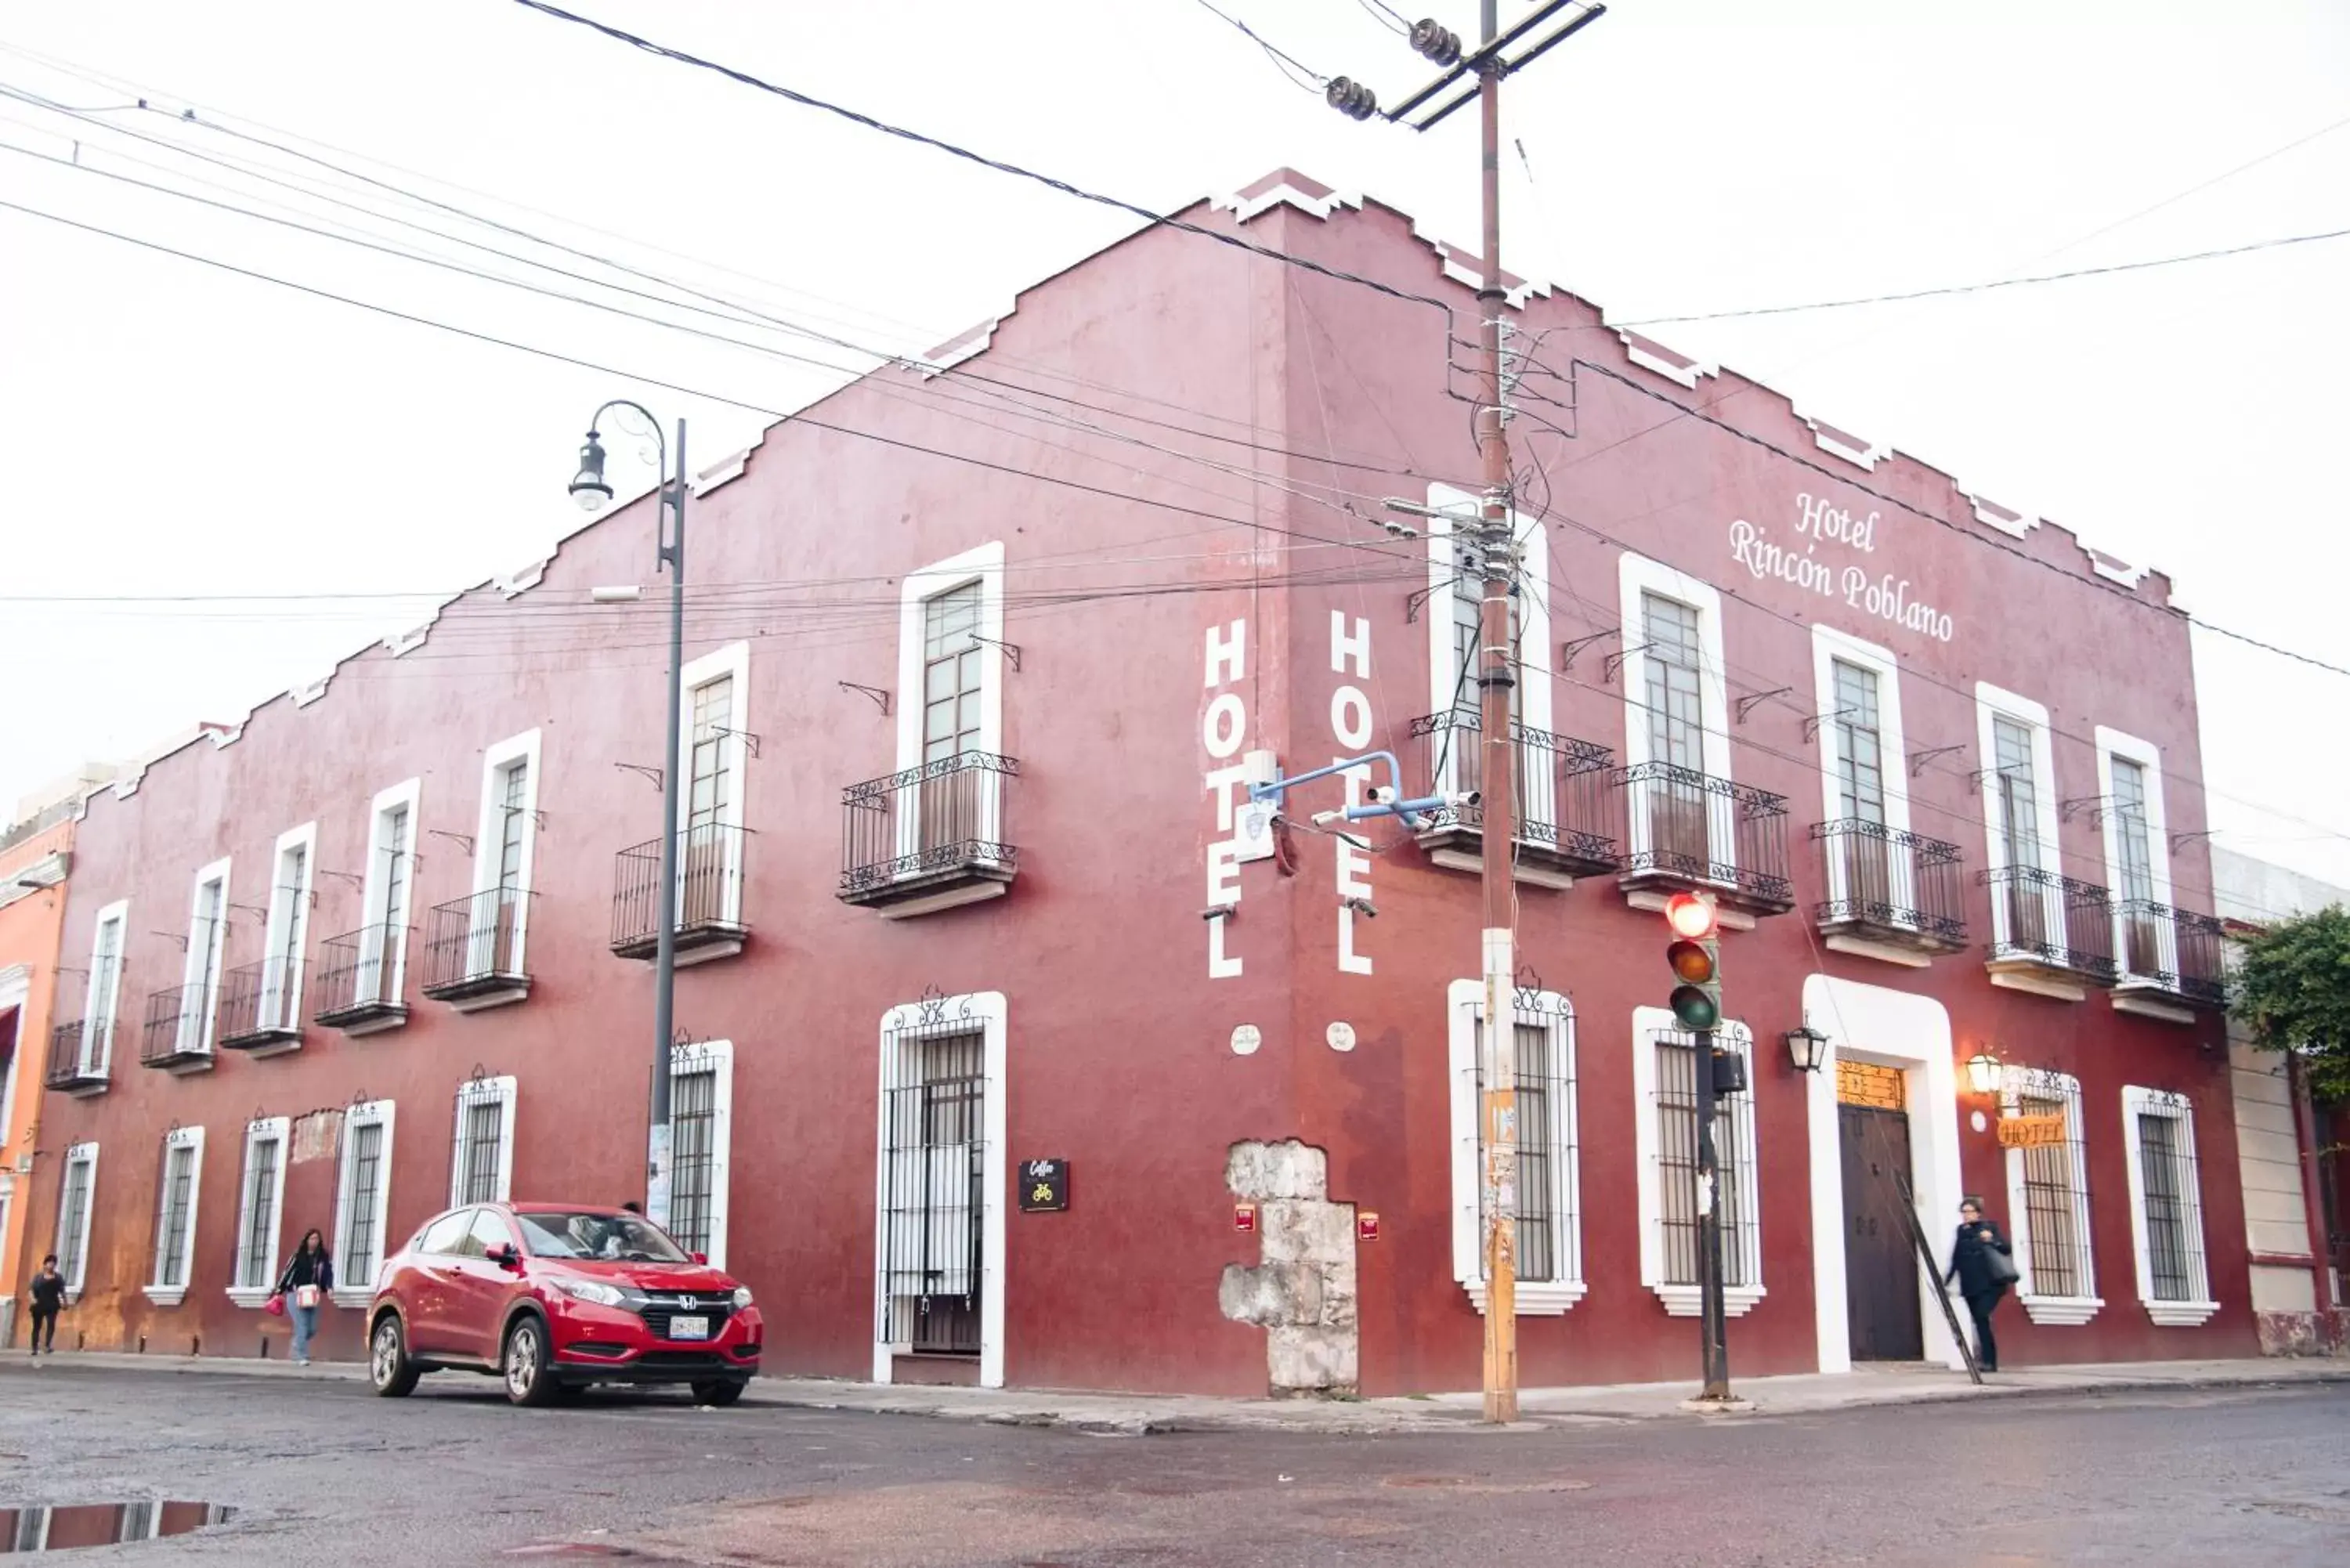 Off site, Property Building in Hotel Rincón Poblano